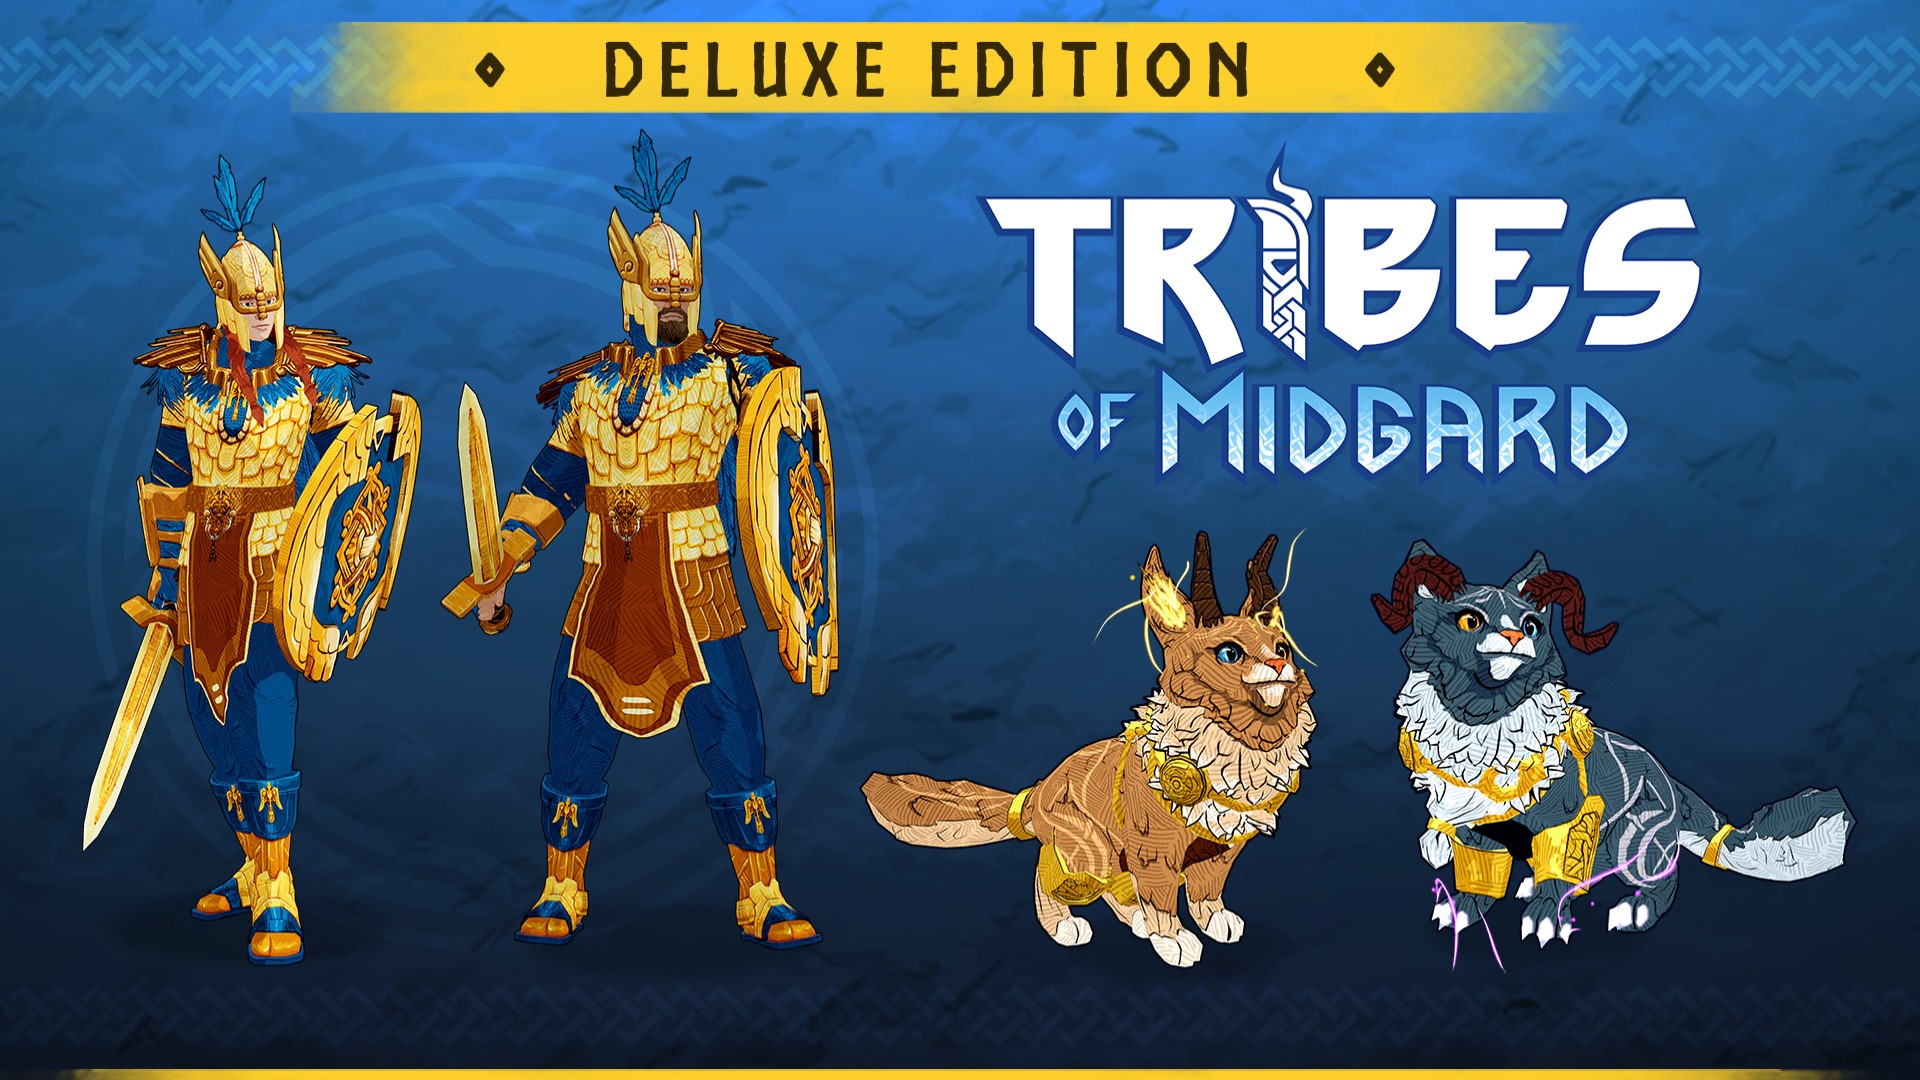 Tribes of Midgard on Steam